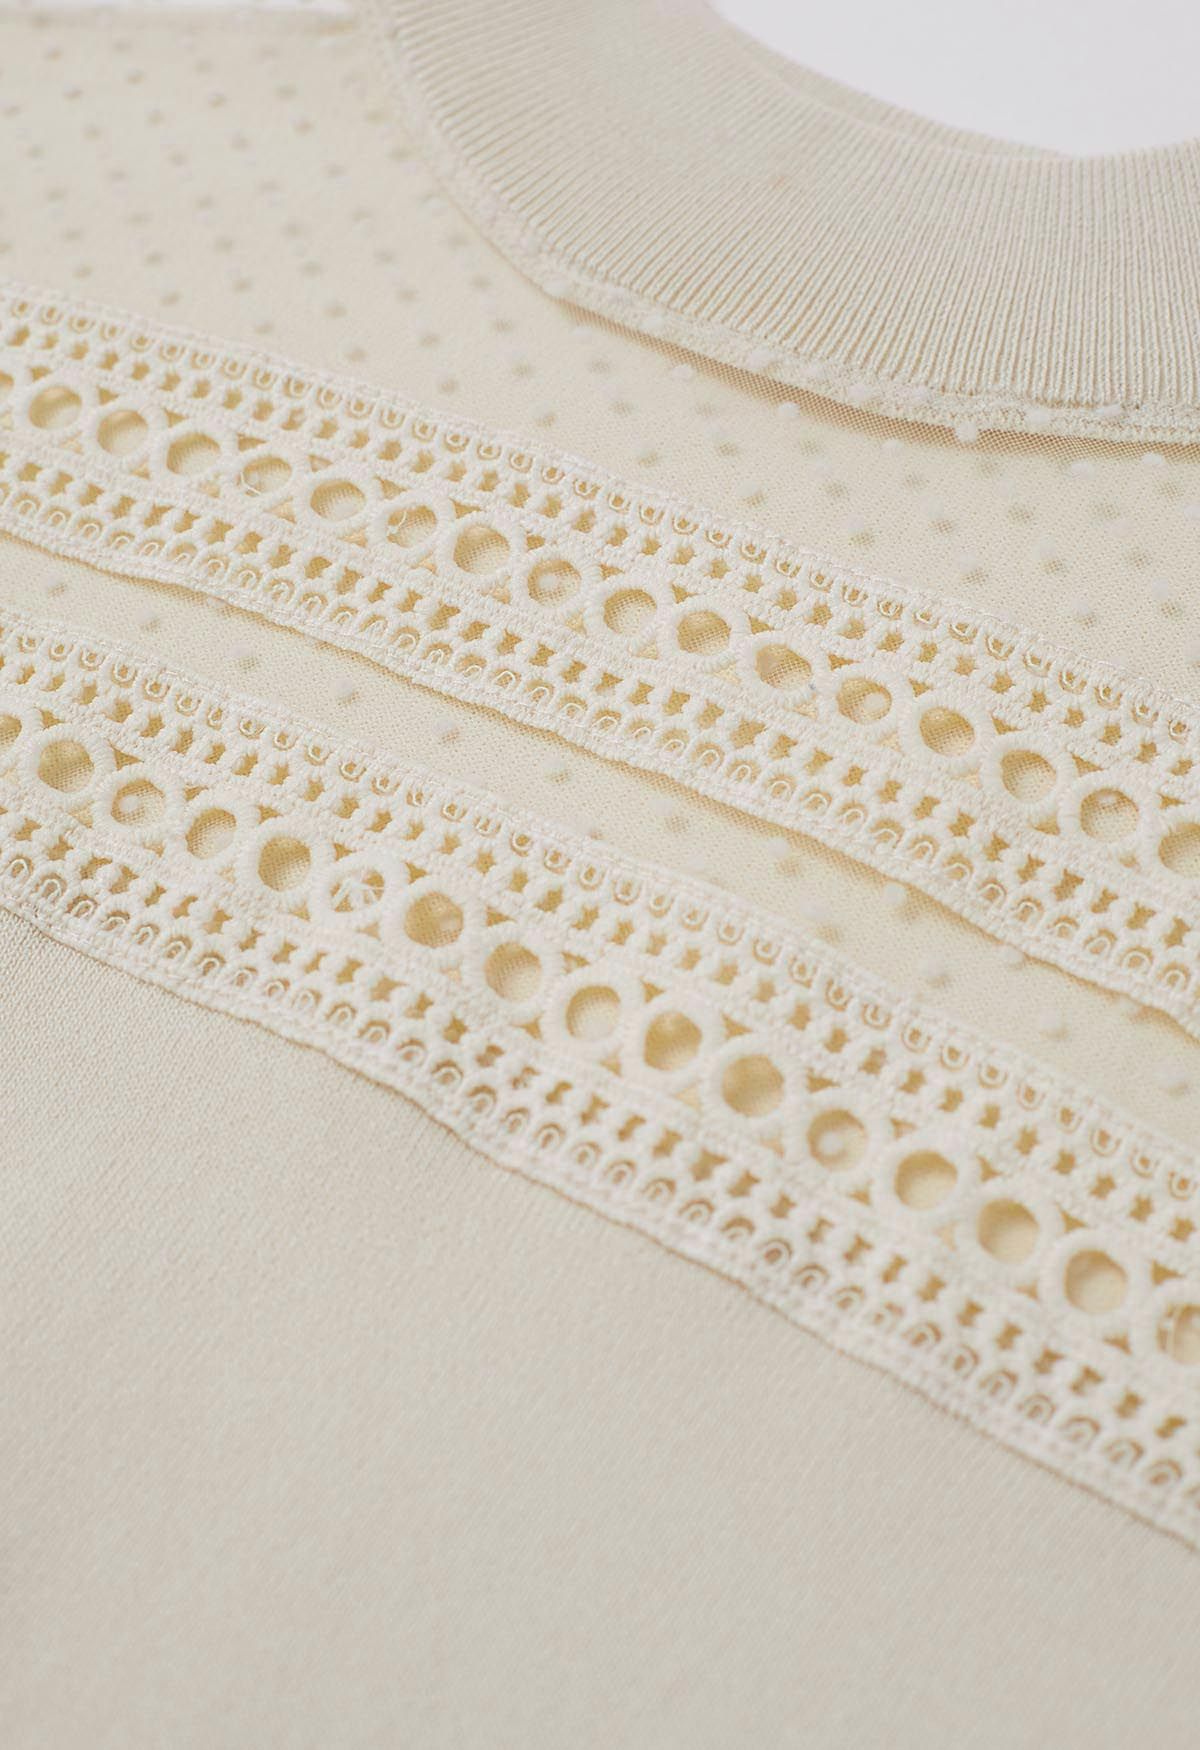 Flock Dots Mesh Spliced Knit Top in Cream